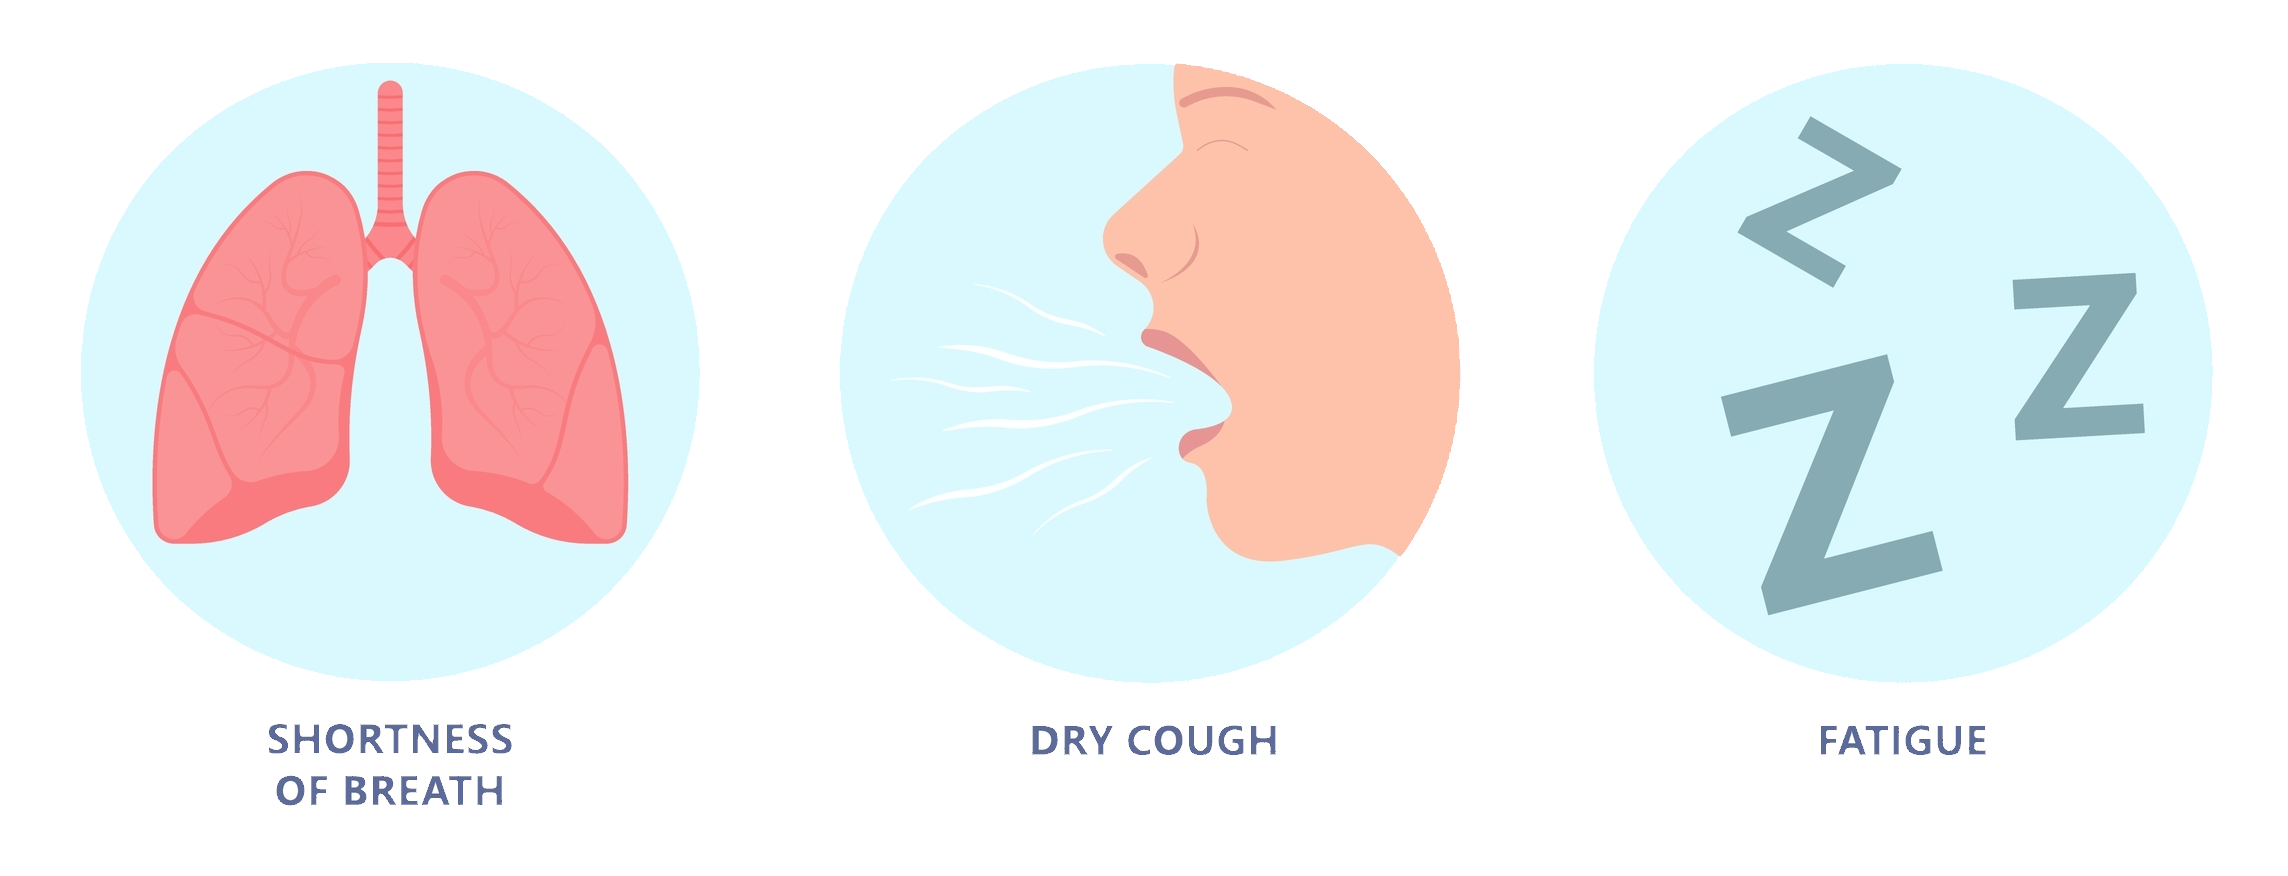 Shortness of breath, dry cough, fatigue